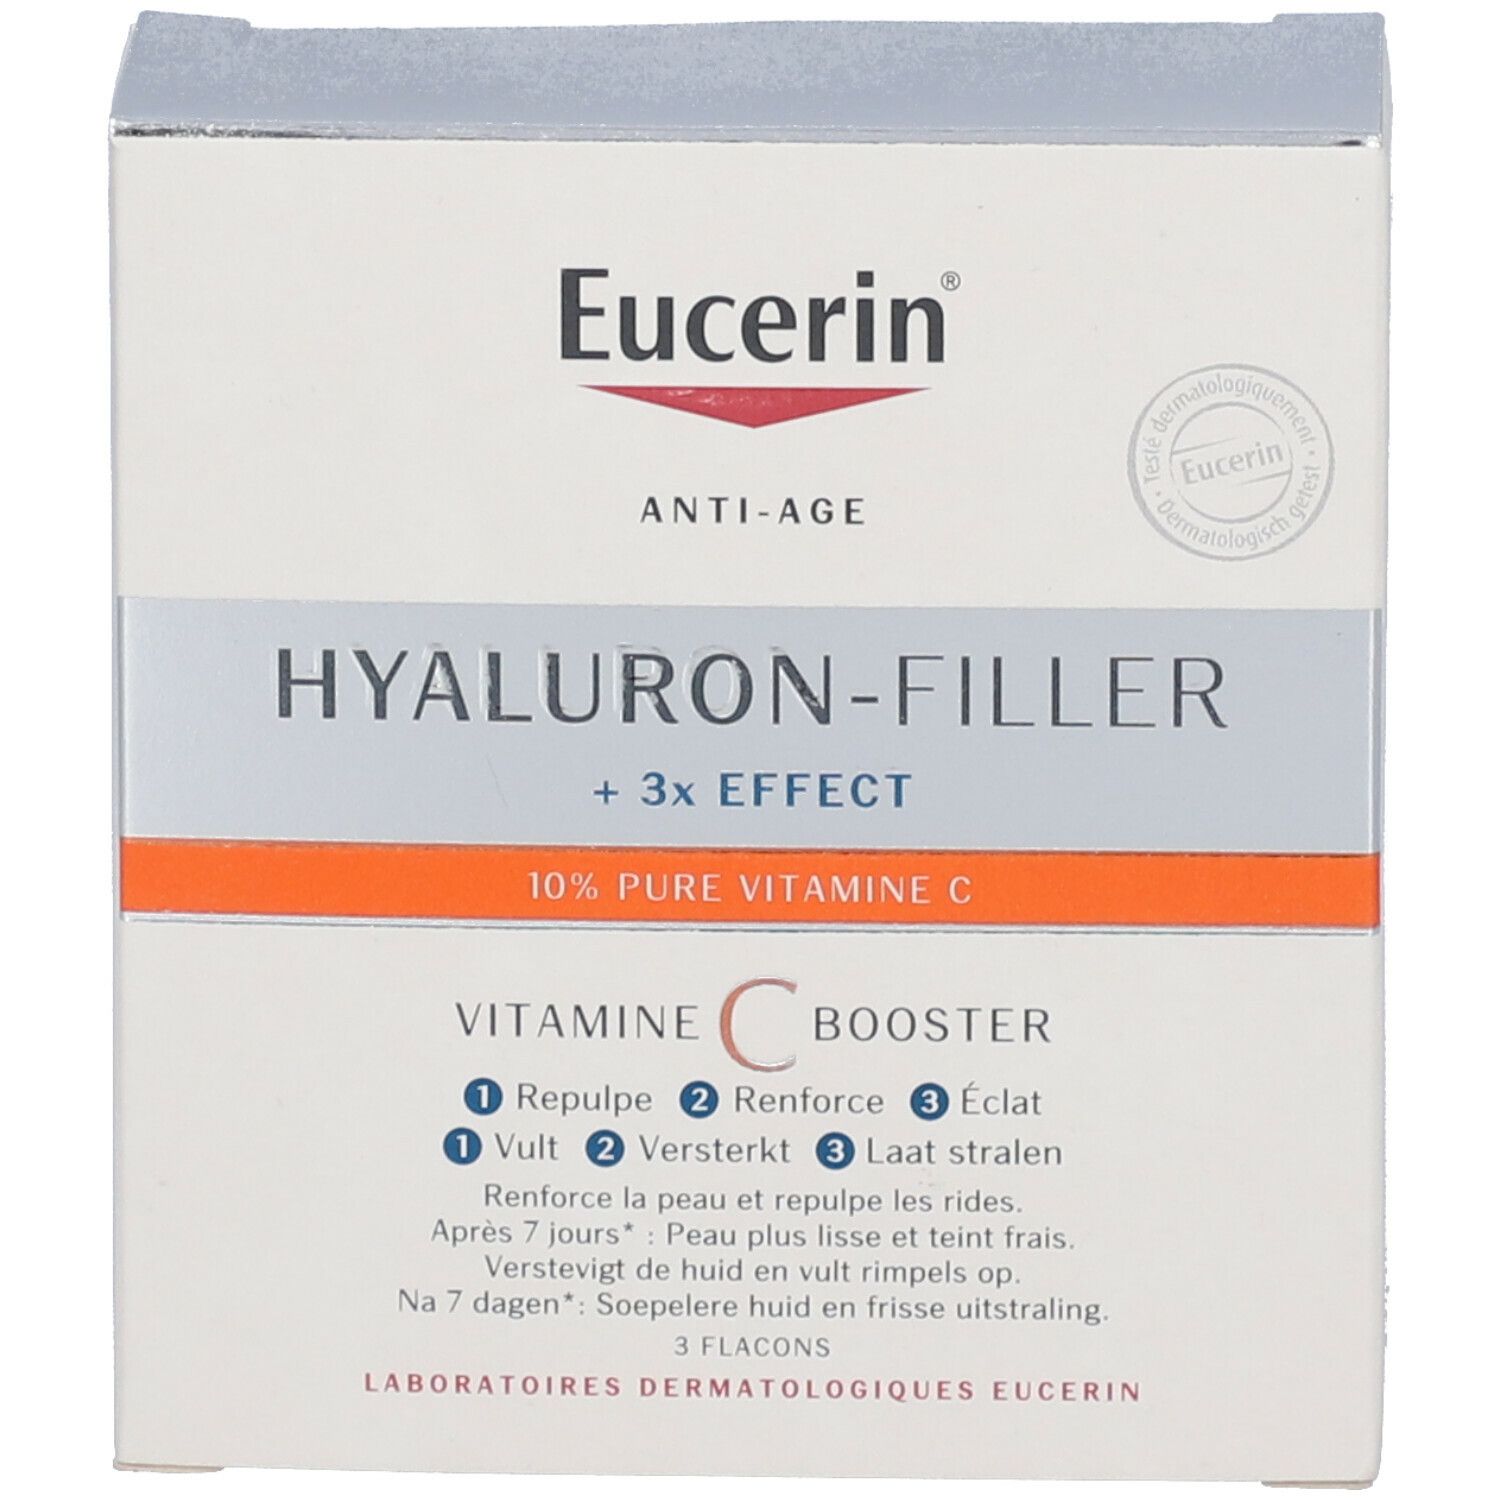 Eucerin Hyaluron-Filler + 3x Effect Vitamine C Booster